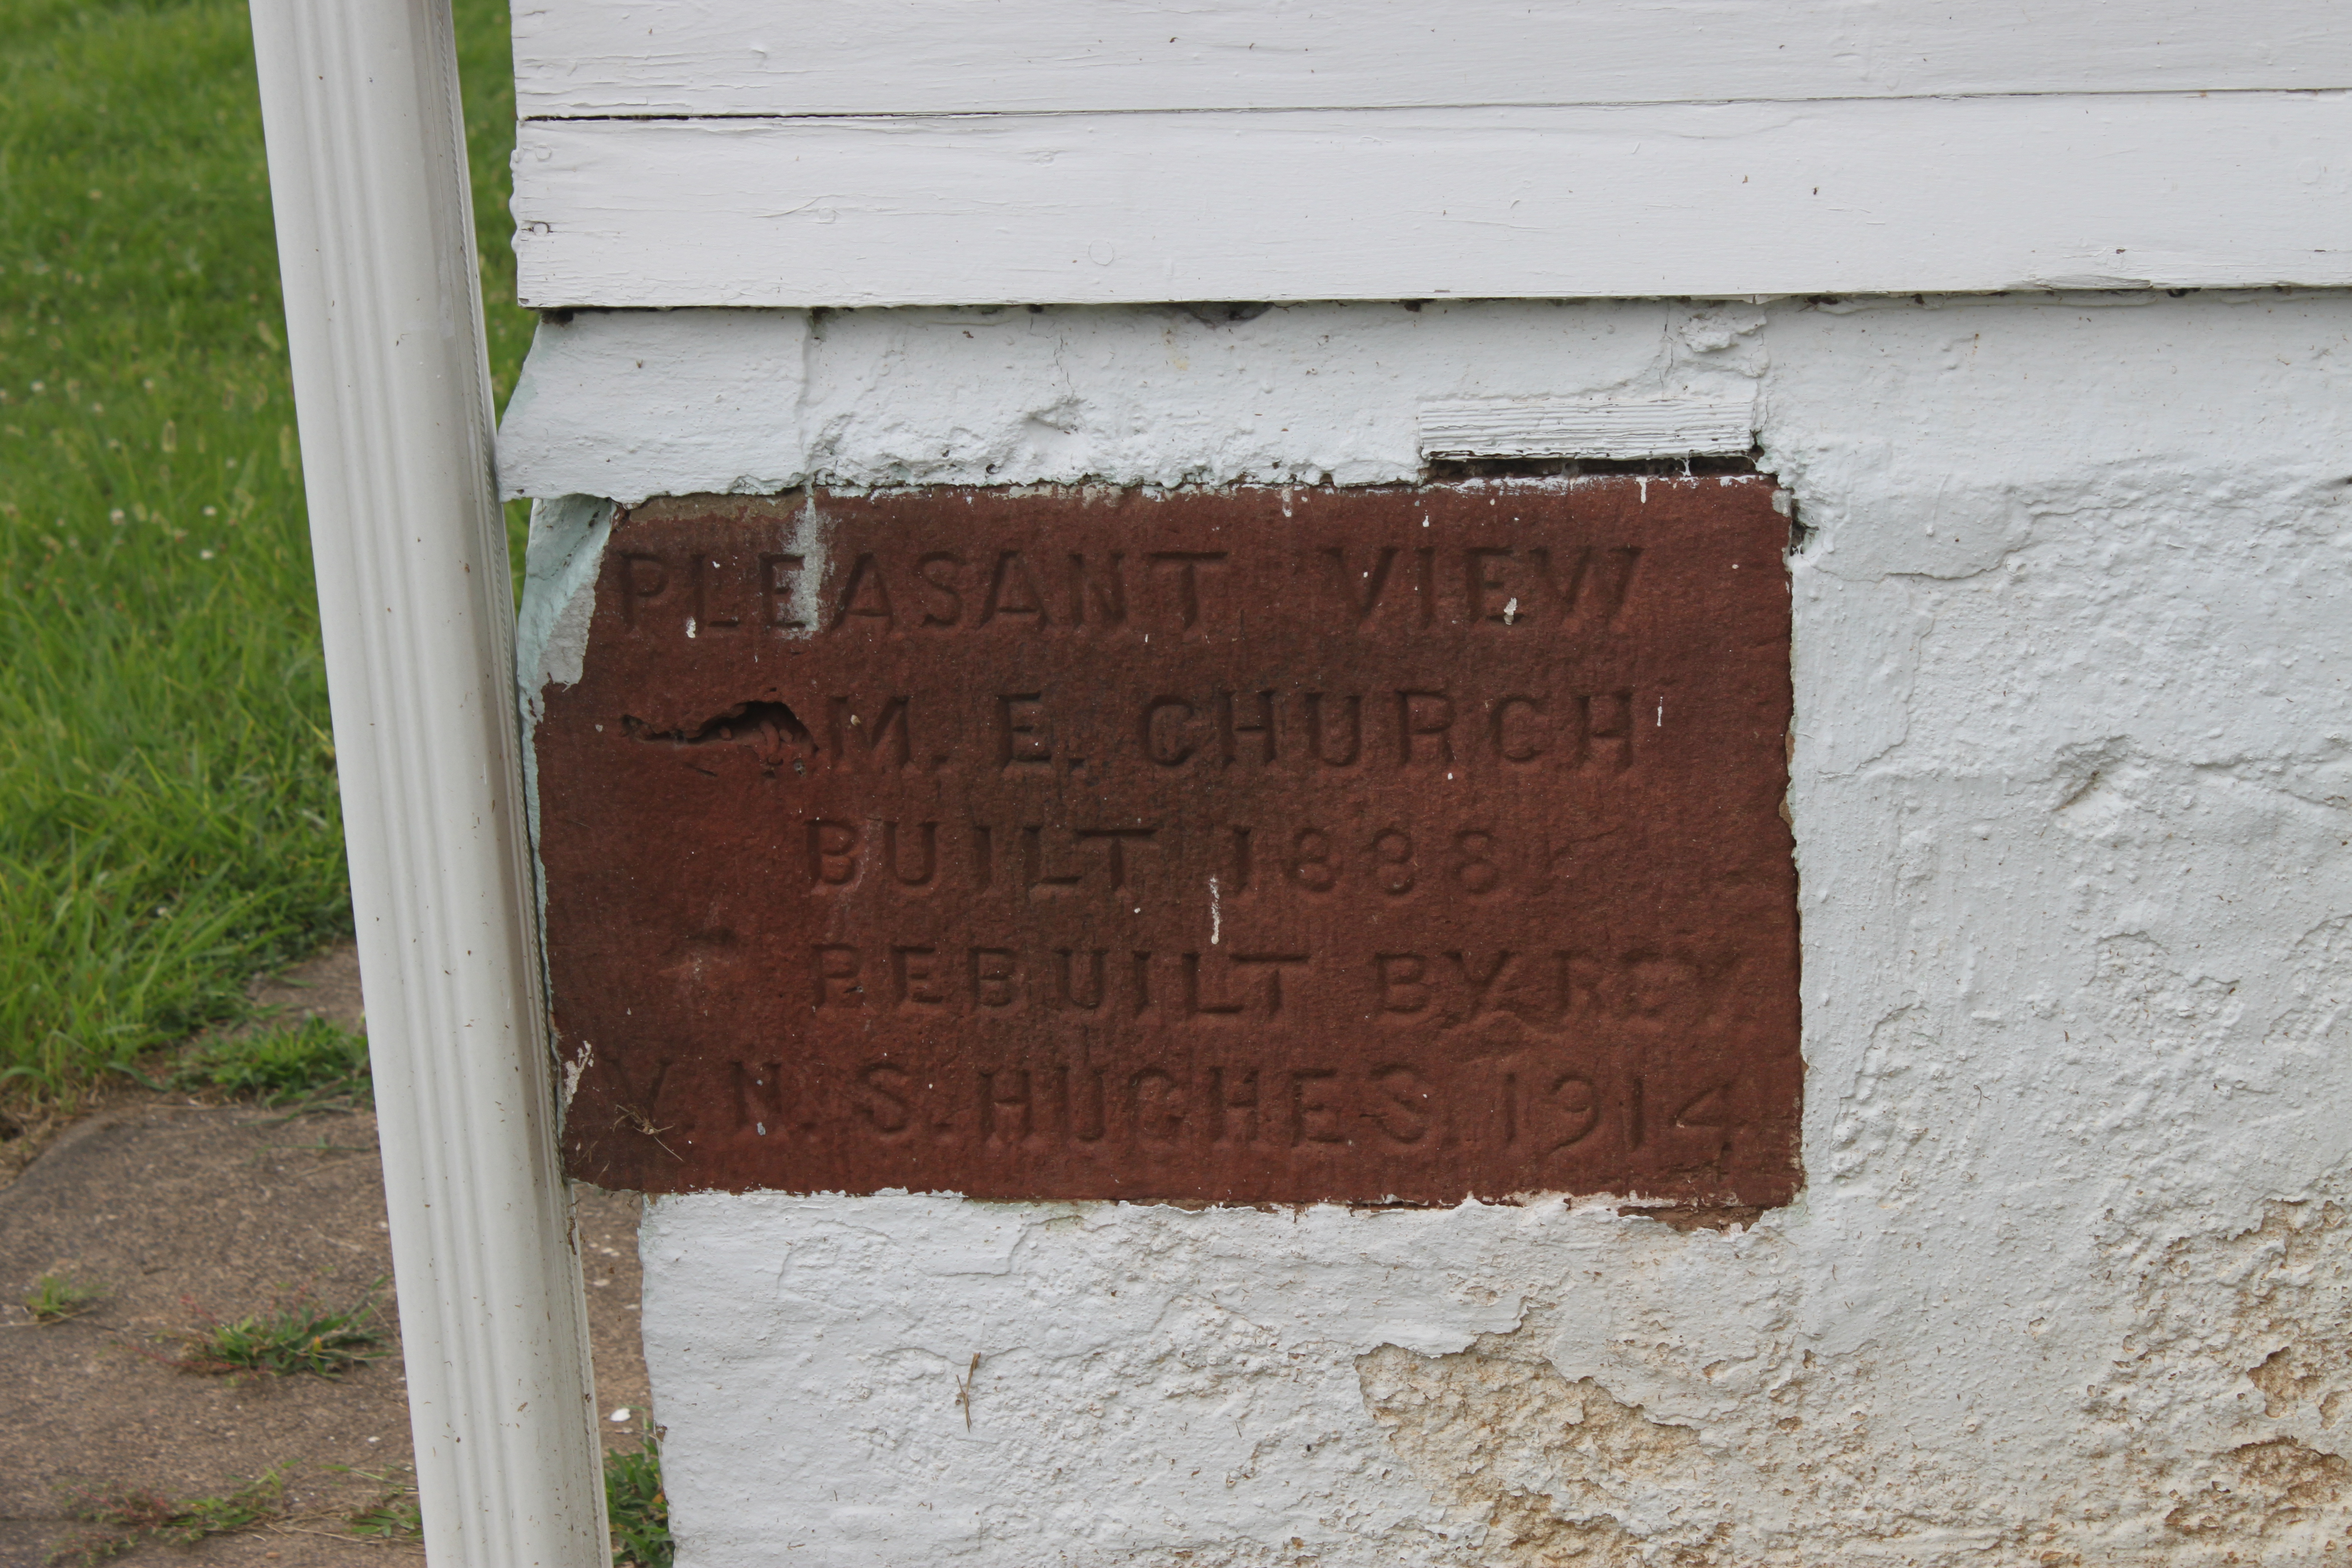 Cornerstone for Pleasant View Methodist Episcopal Church. It reads "Pleasant View M.E. Church, built 1888, rebuilt by Rev. N. S. Hughes, 1914."